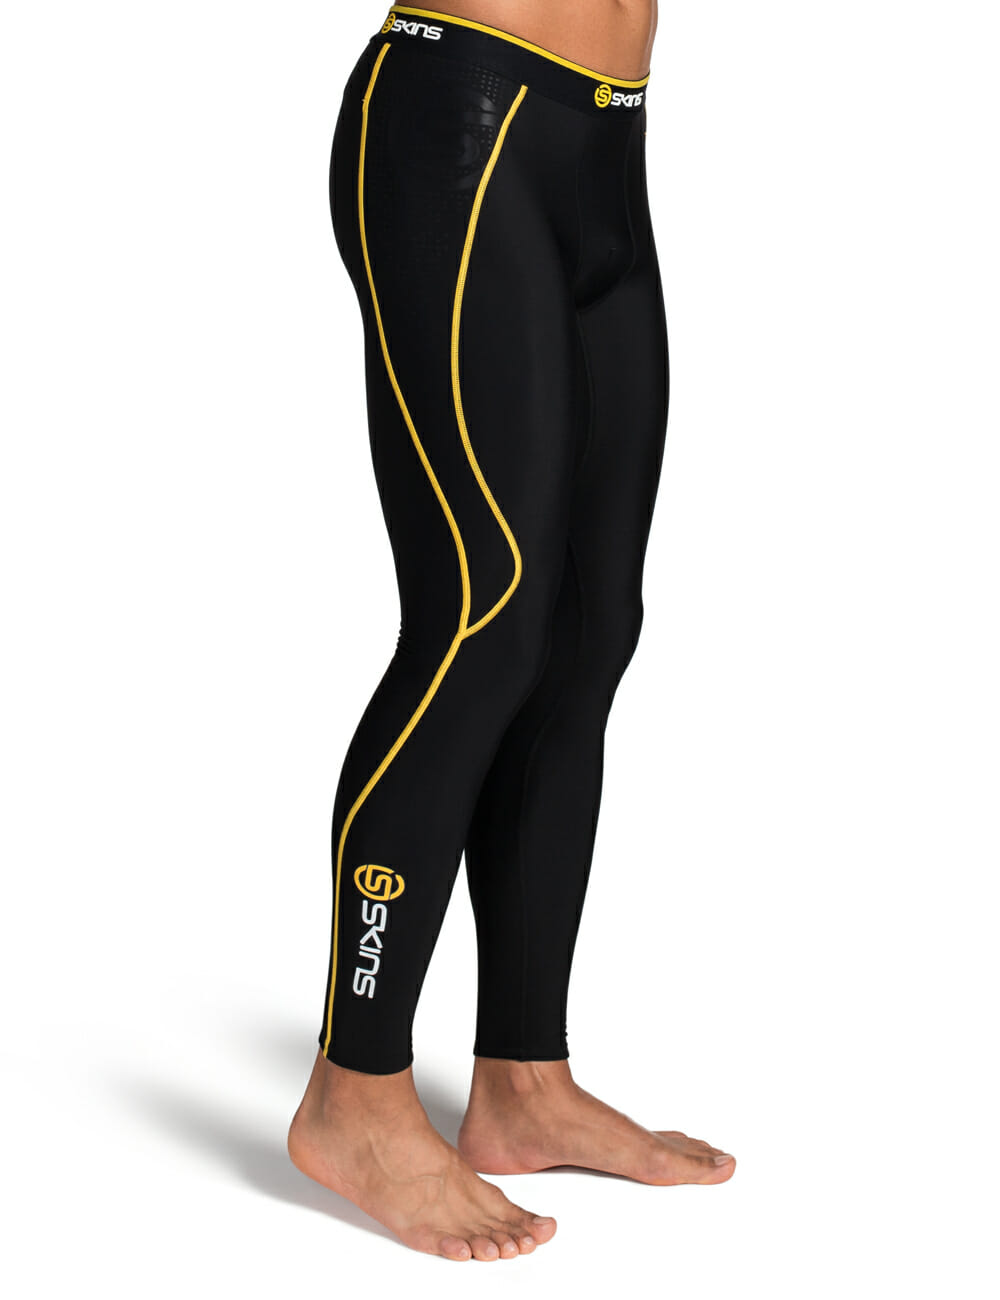 SKINS Men's A200 Thermal Long Tights Black/Yellow - SKINS